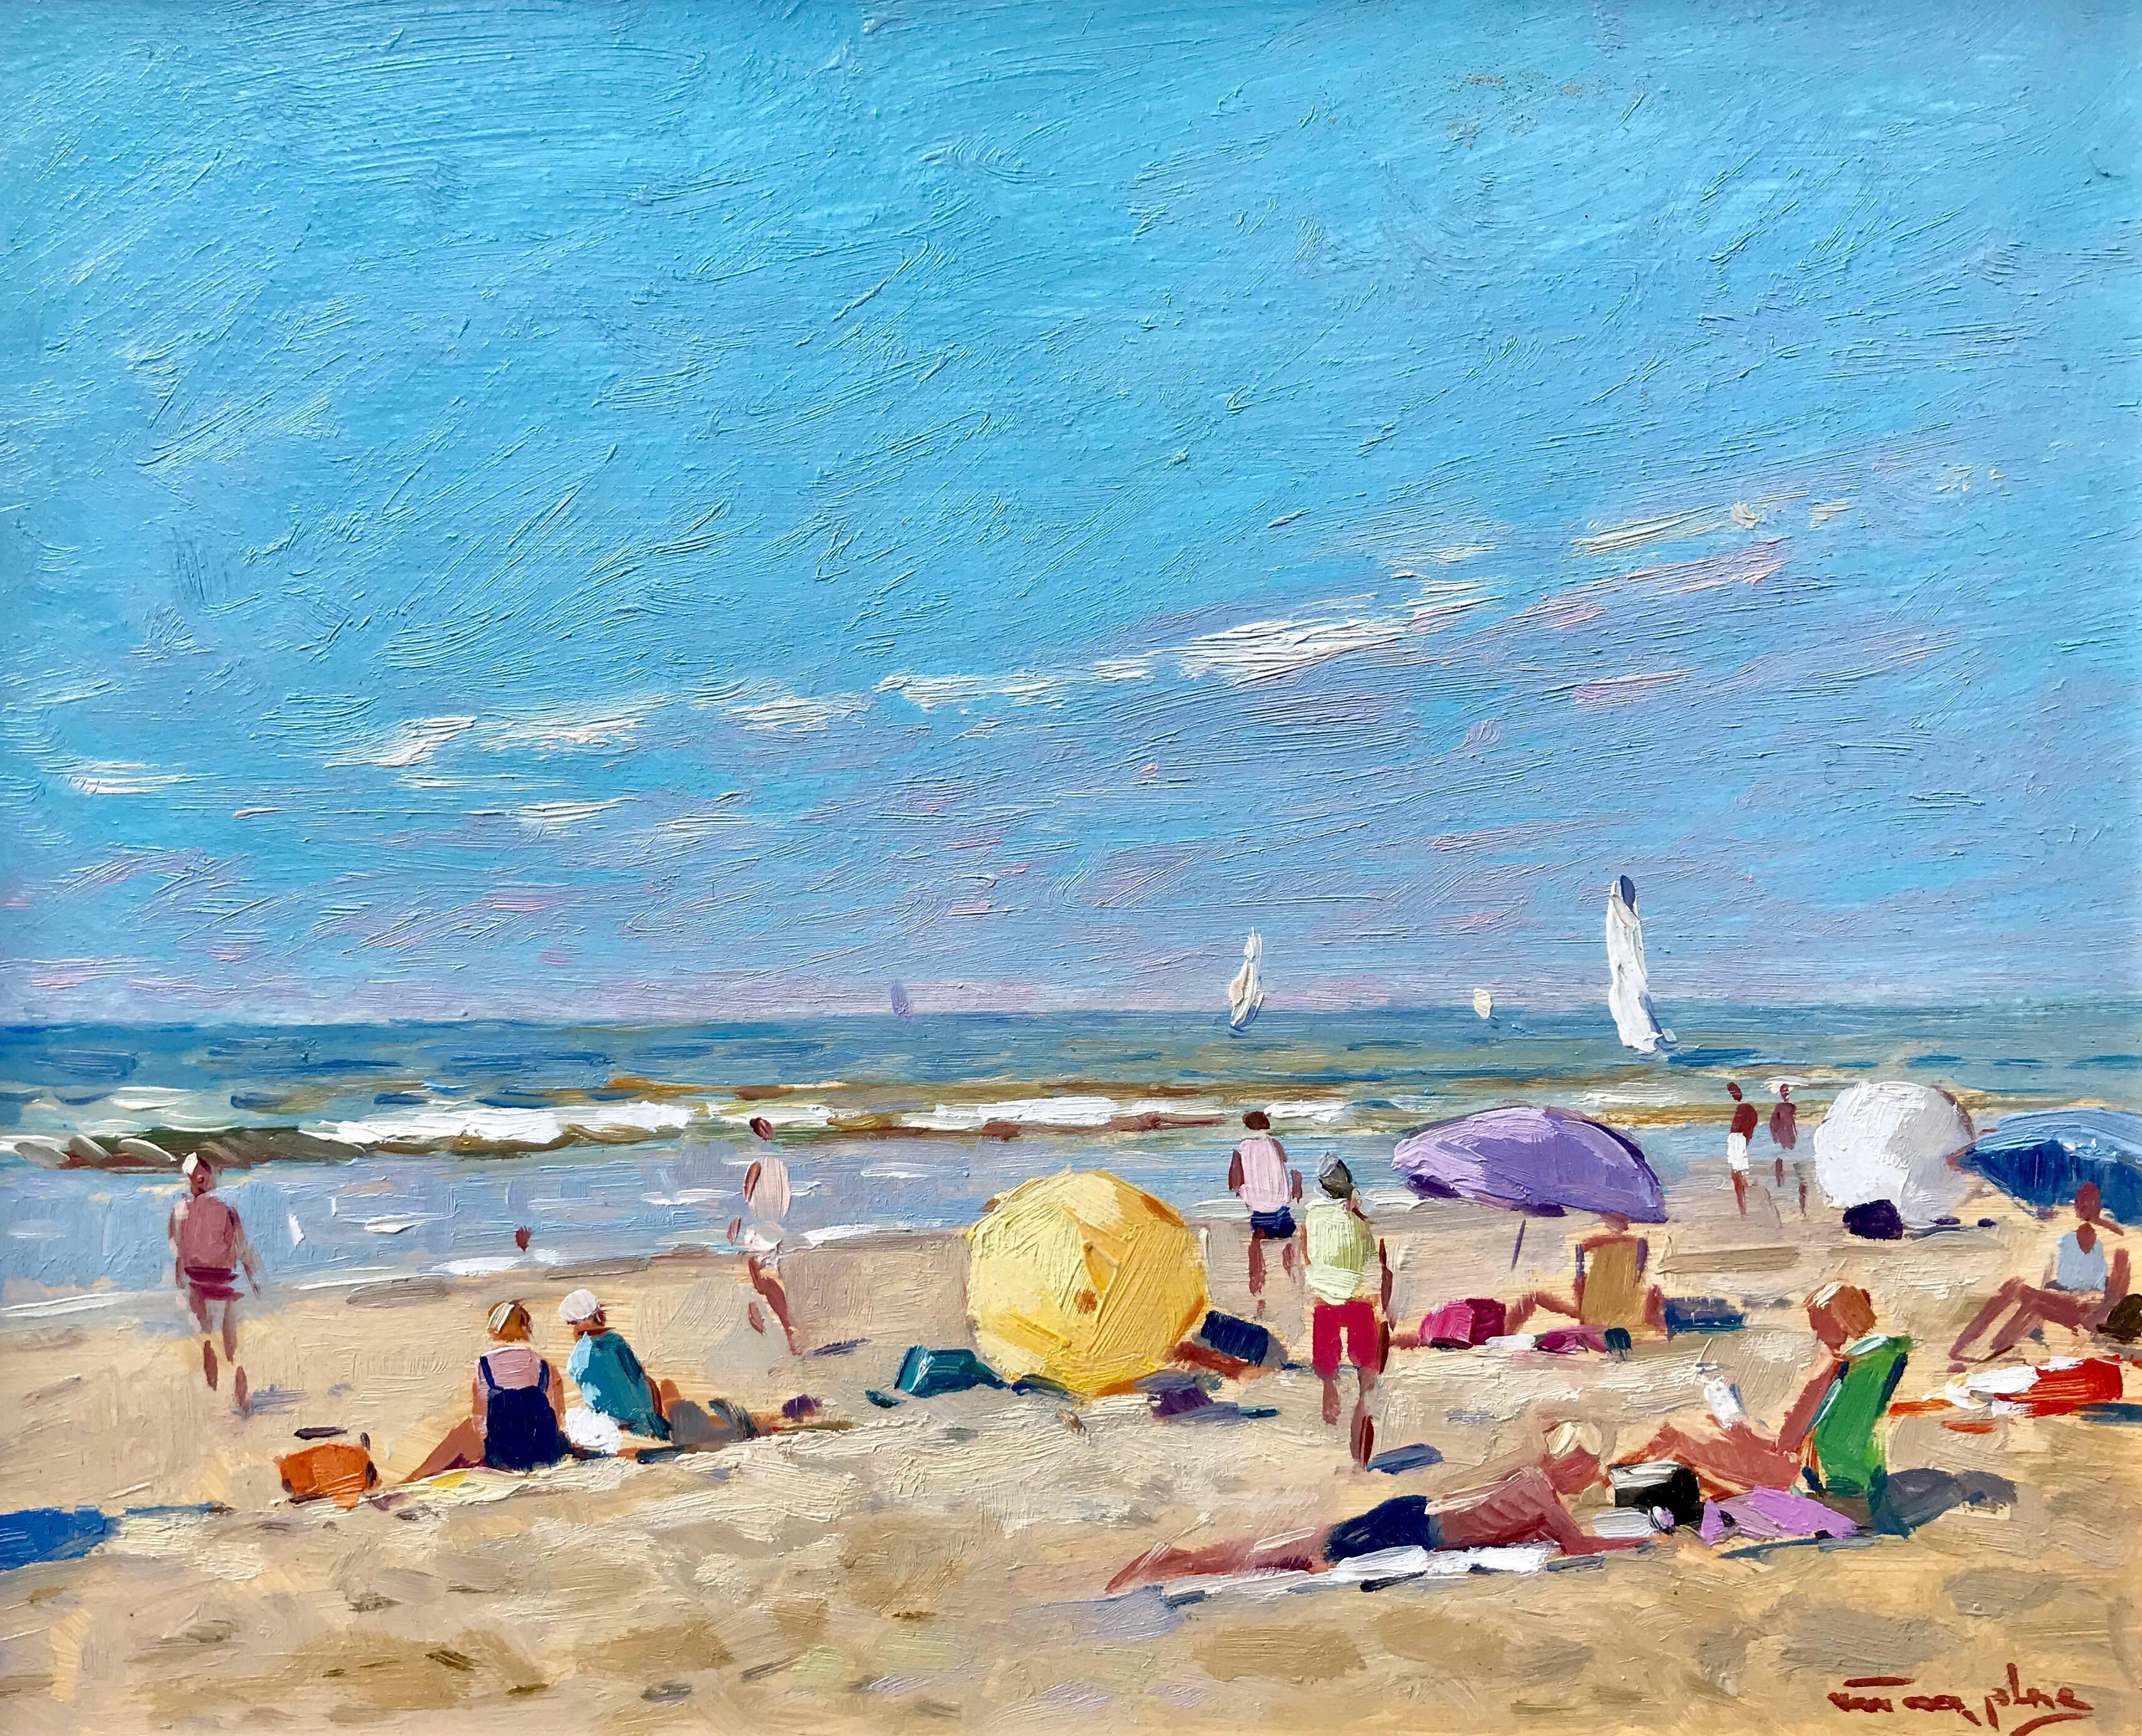 Niek van der Plas Landscape Painting - “Perfect Beach Day”